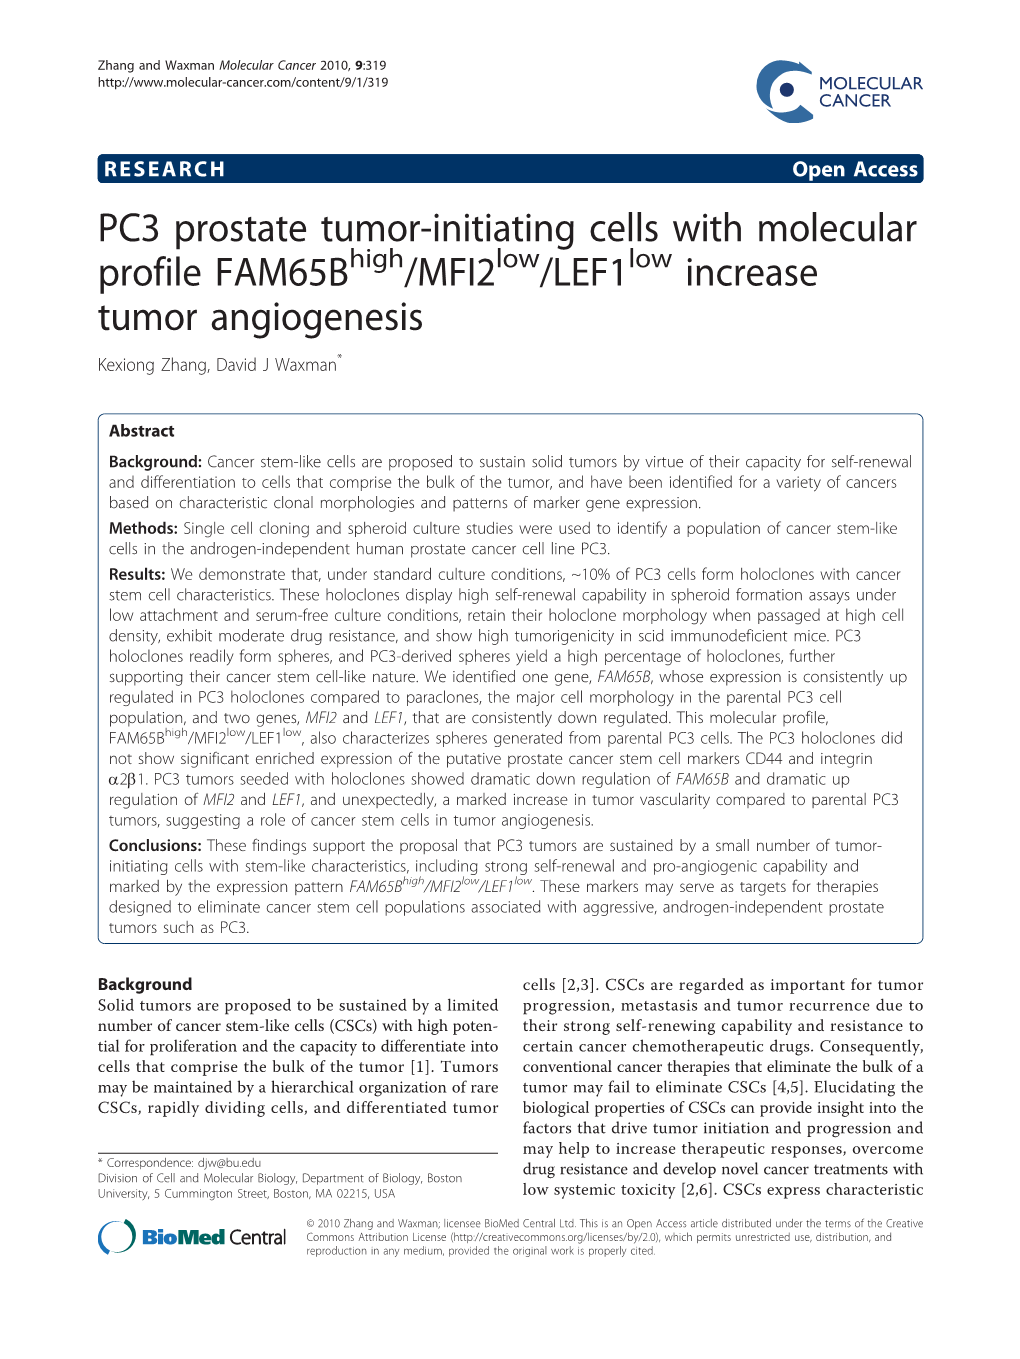 PC3 Prostate Tumor-Initiating Cells with Molecular Profile FAM65B /MFI2